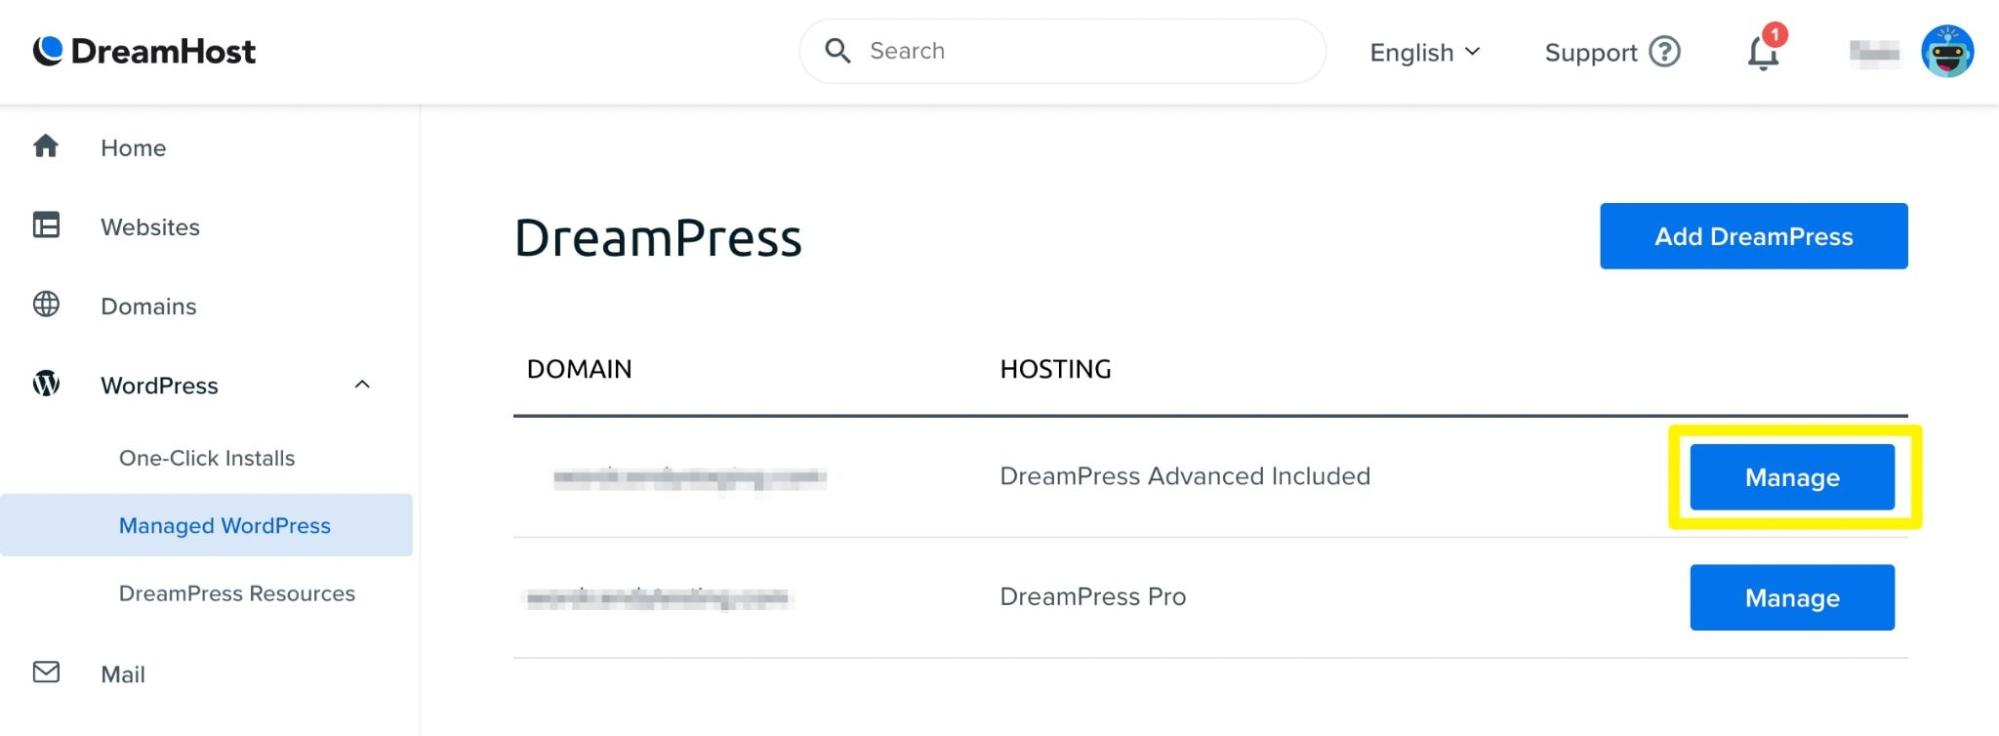 DreamPress managed WordPress settings in Panel